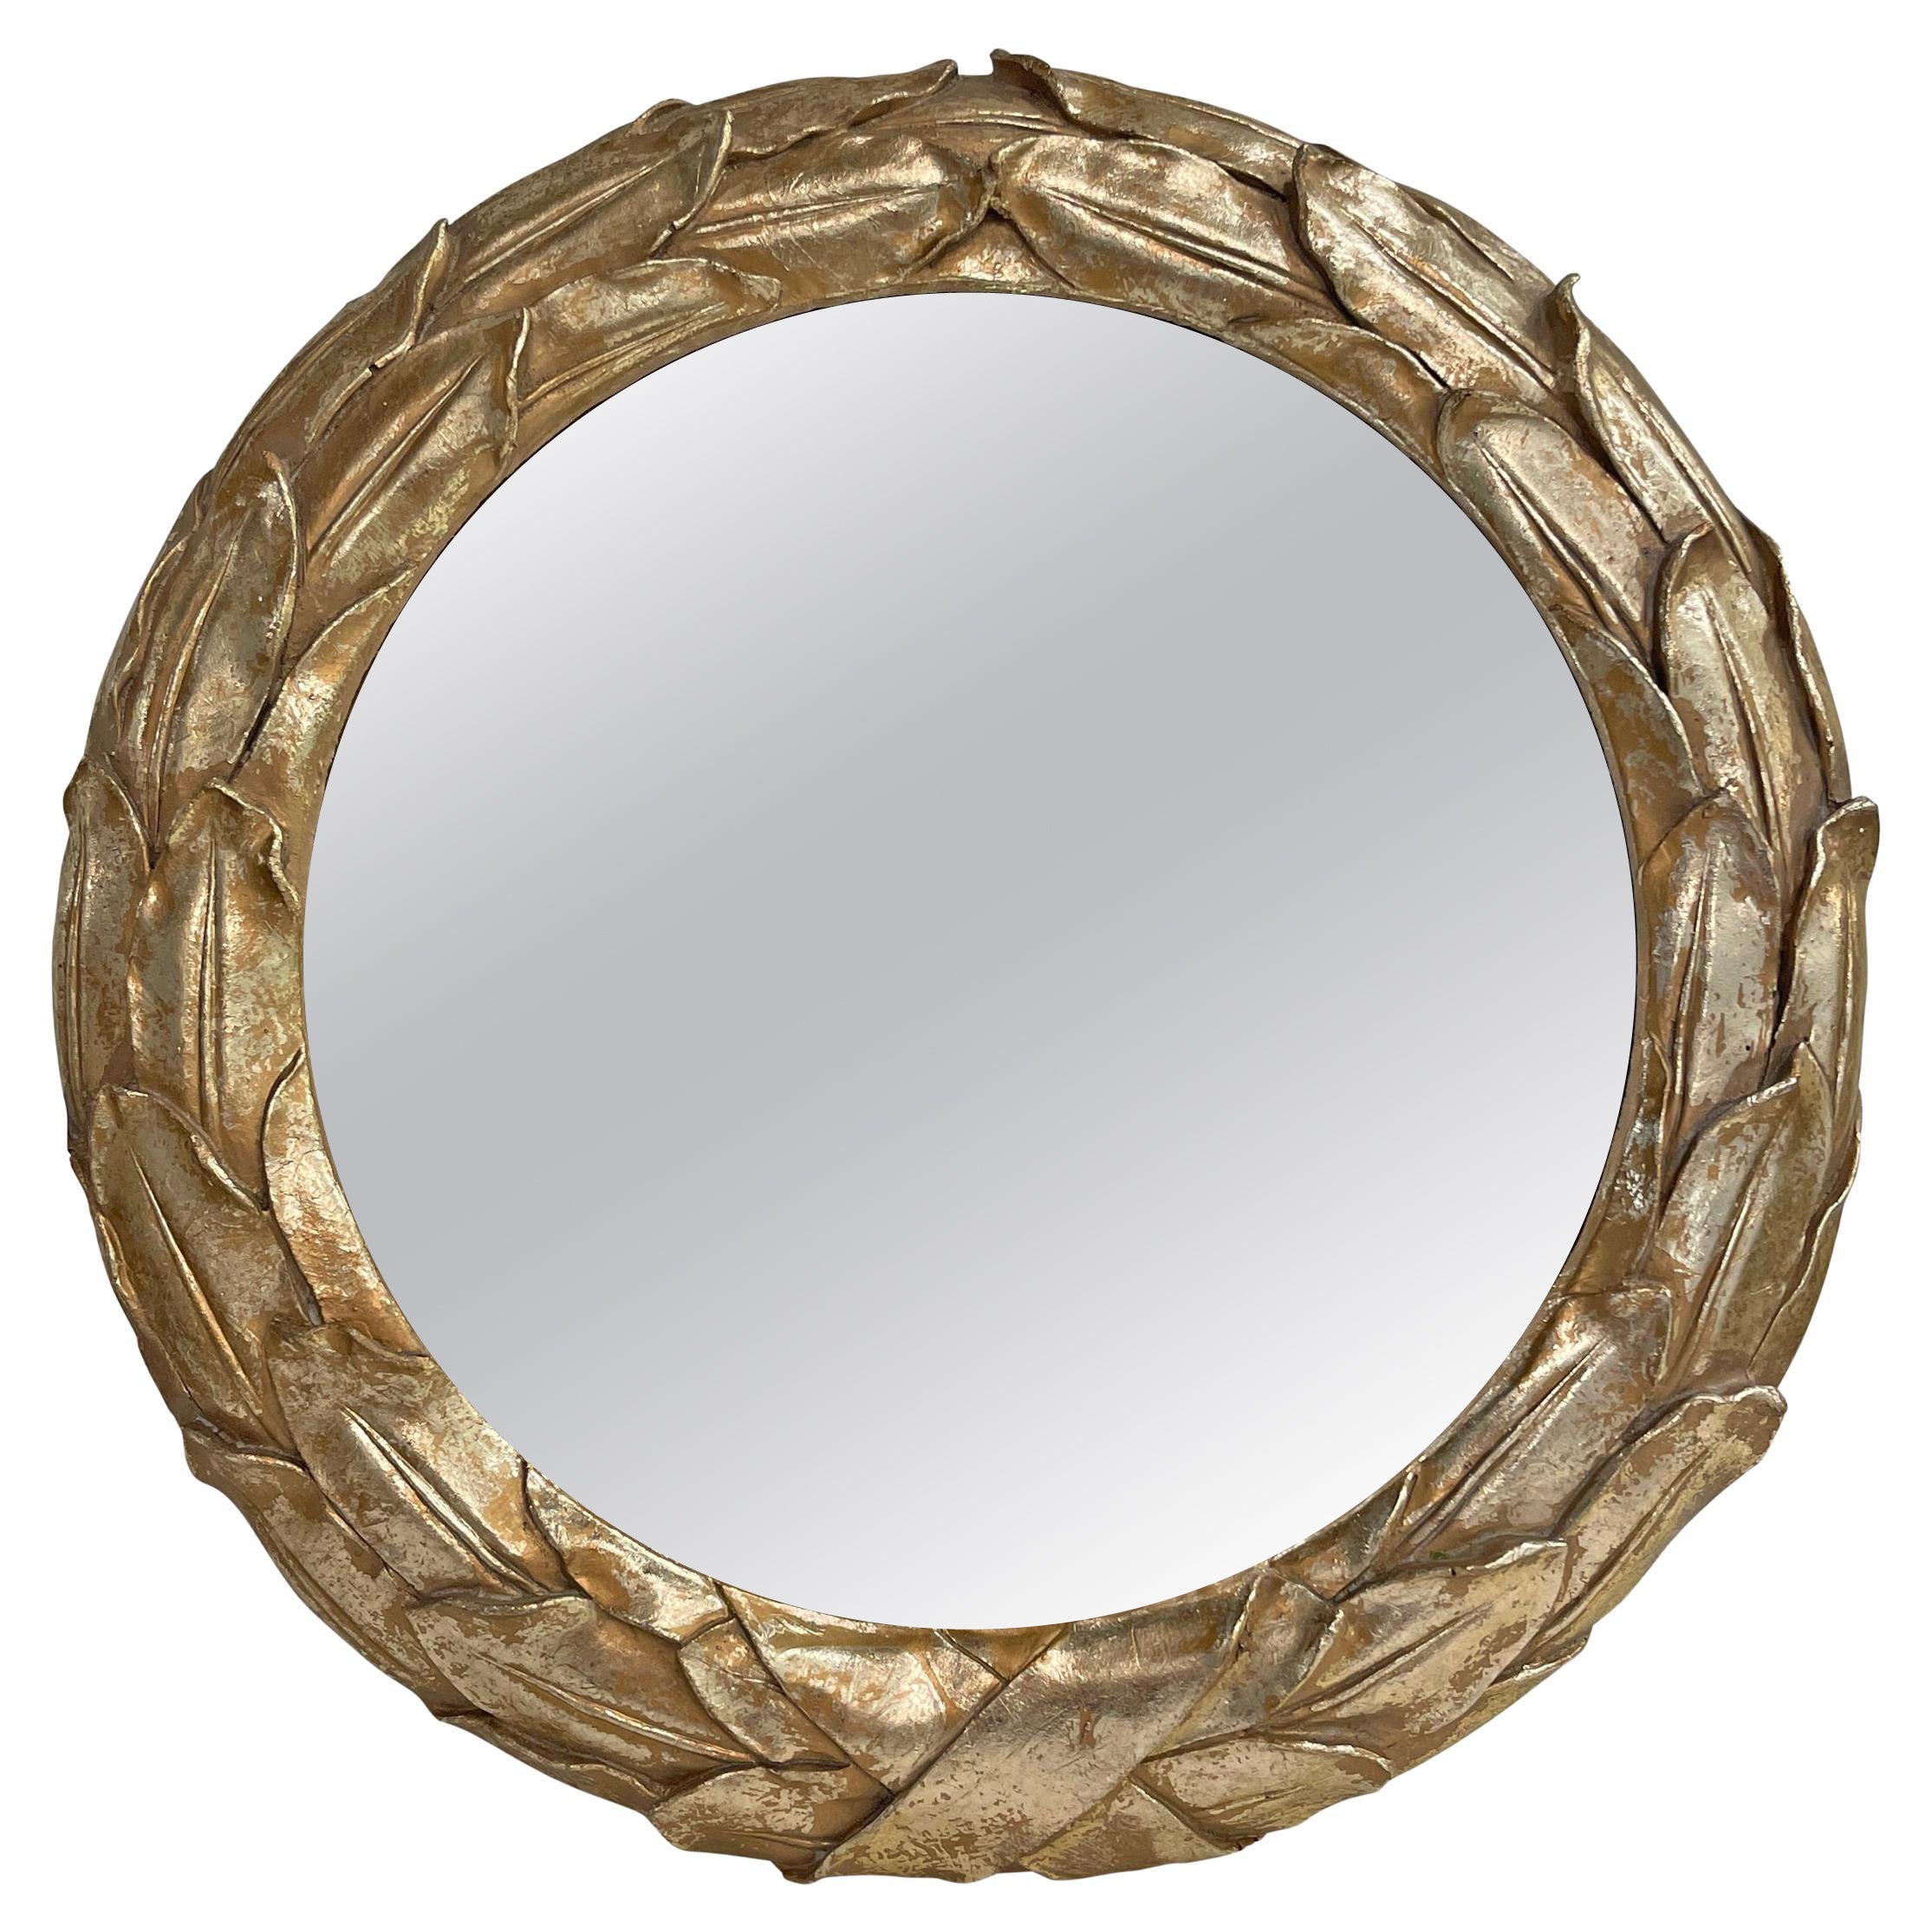 Neoclassical Silver Leaf Convex Mirror